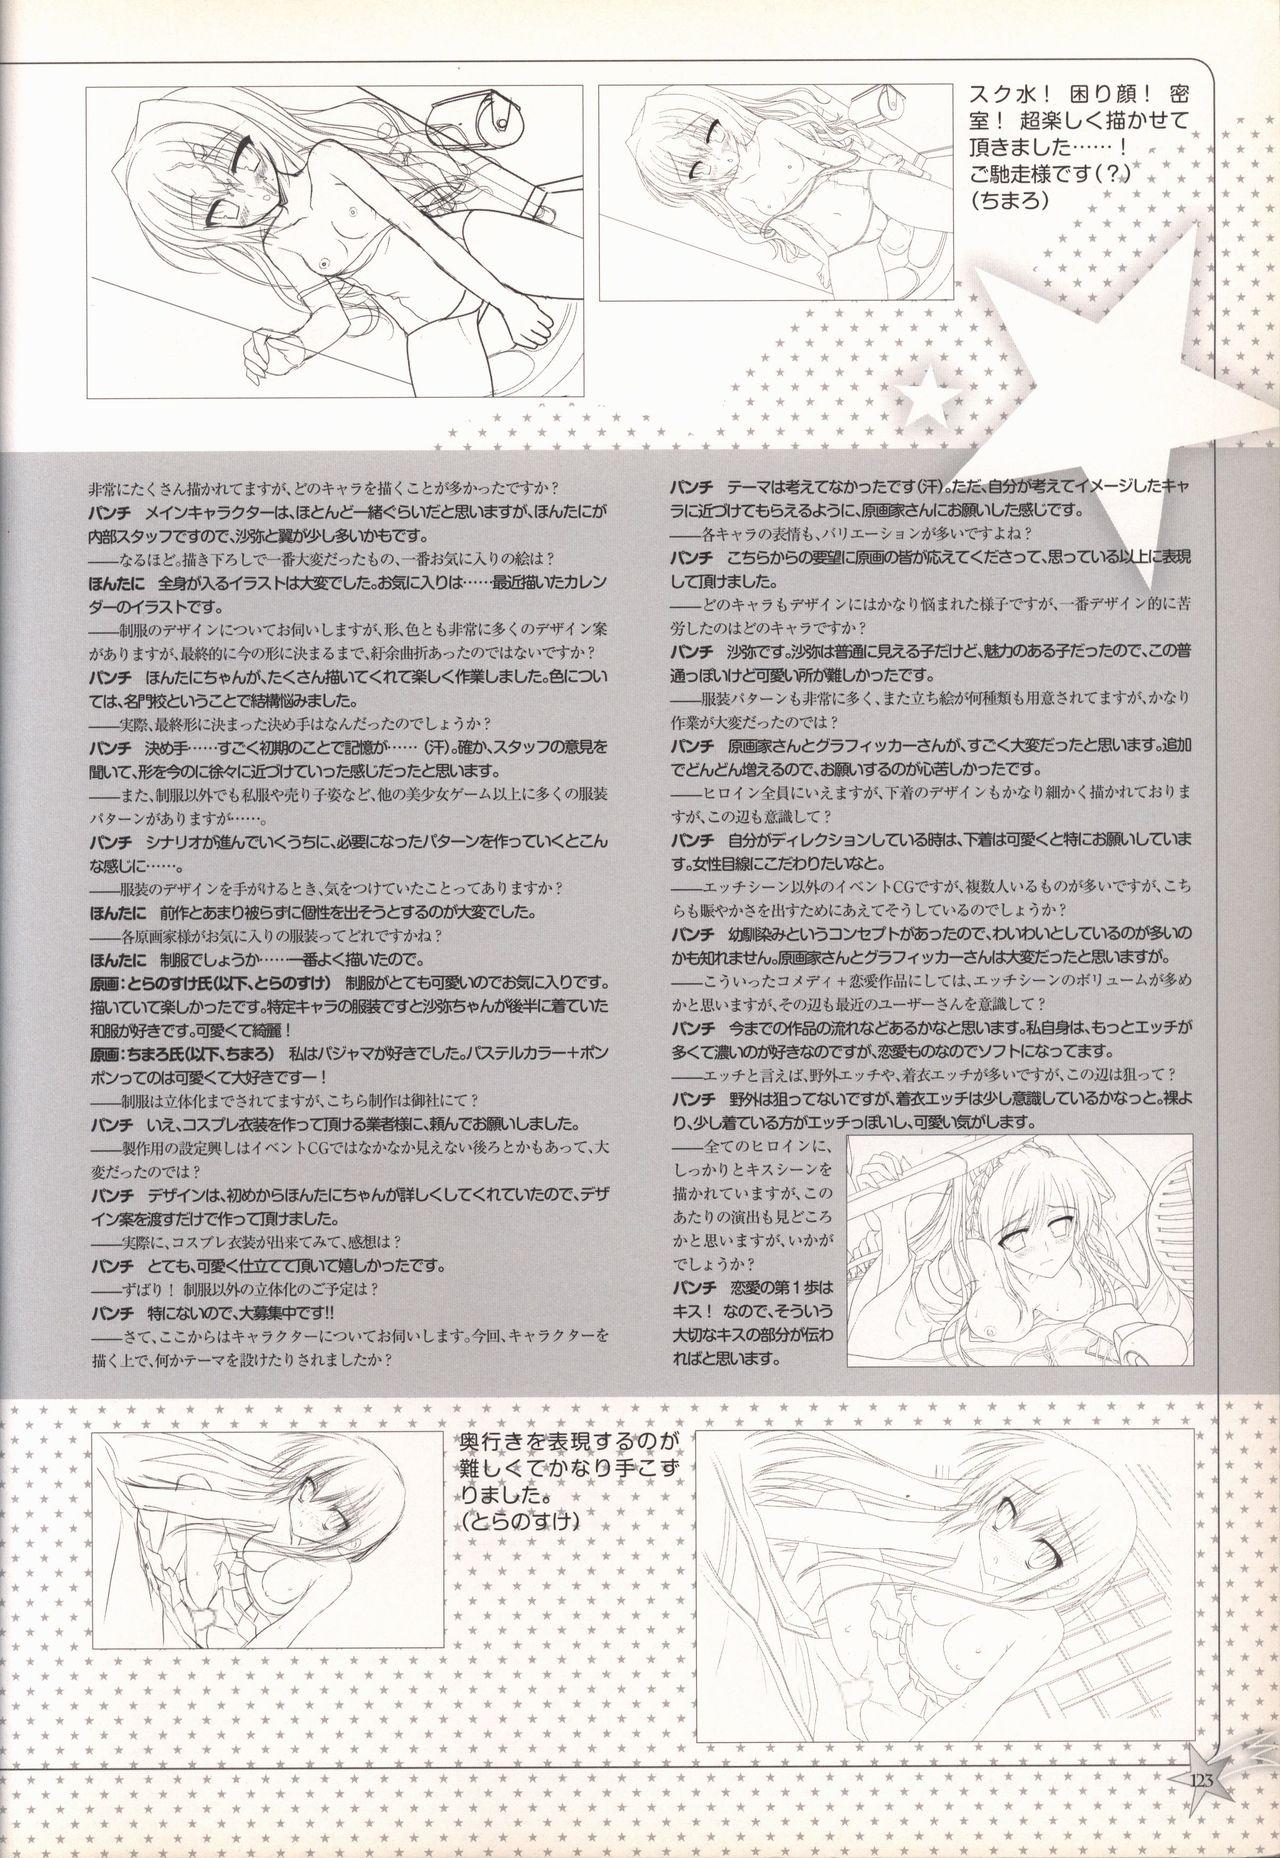 KisaragiGOLD★STAR Visual Fanbook 123